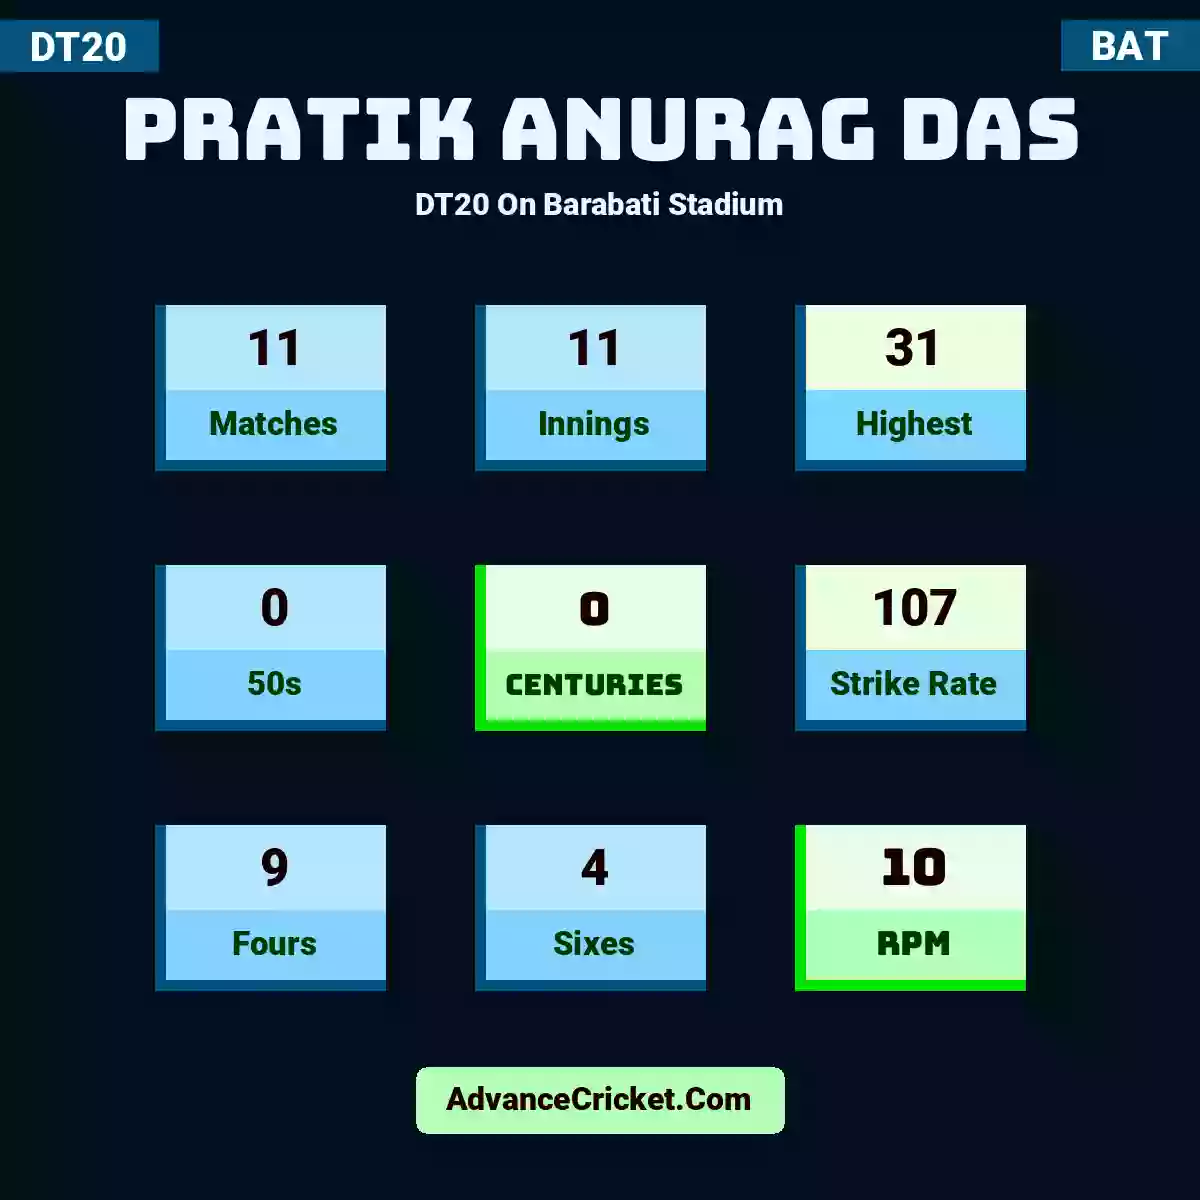 Pratik Anurag Das DT20  On Barabati Stadium, Pratik Anurag Das played 11 matches, scored 31 runs as highest, 0 half-centuries, and 0 centuries, with a strike rate of 107. PA.Das hit 9 fours and 4 sixes, with an RPM of 10.